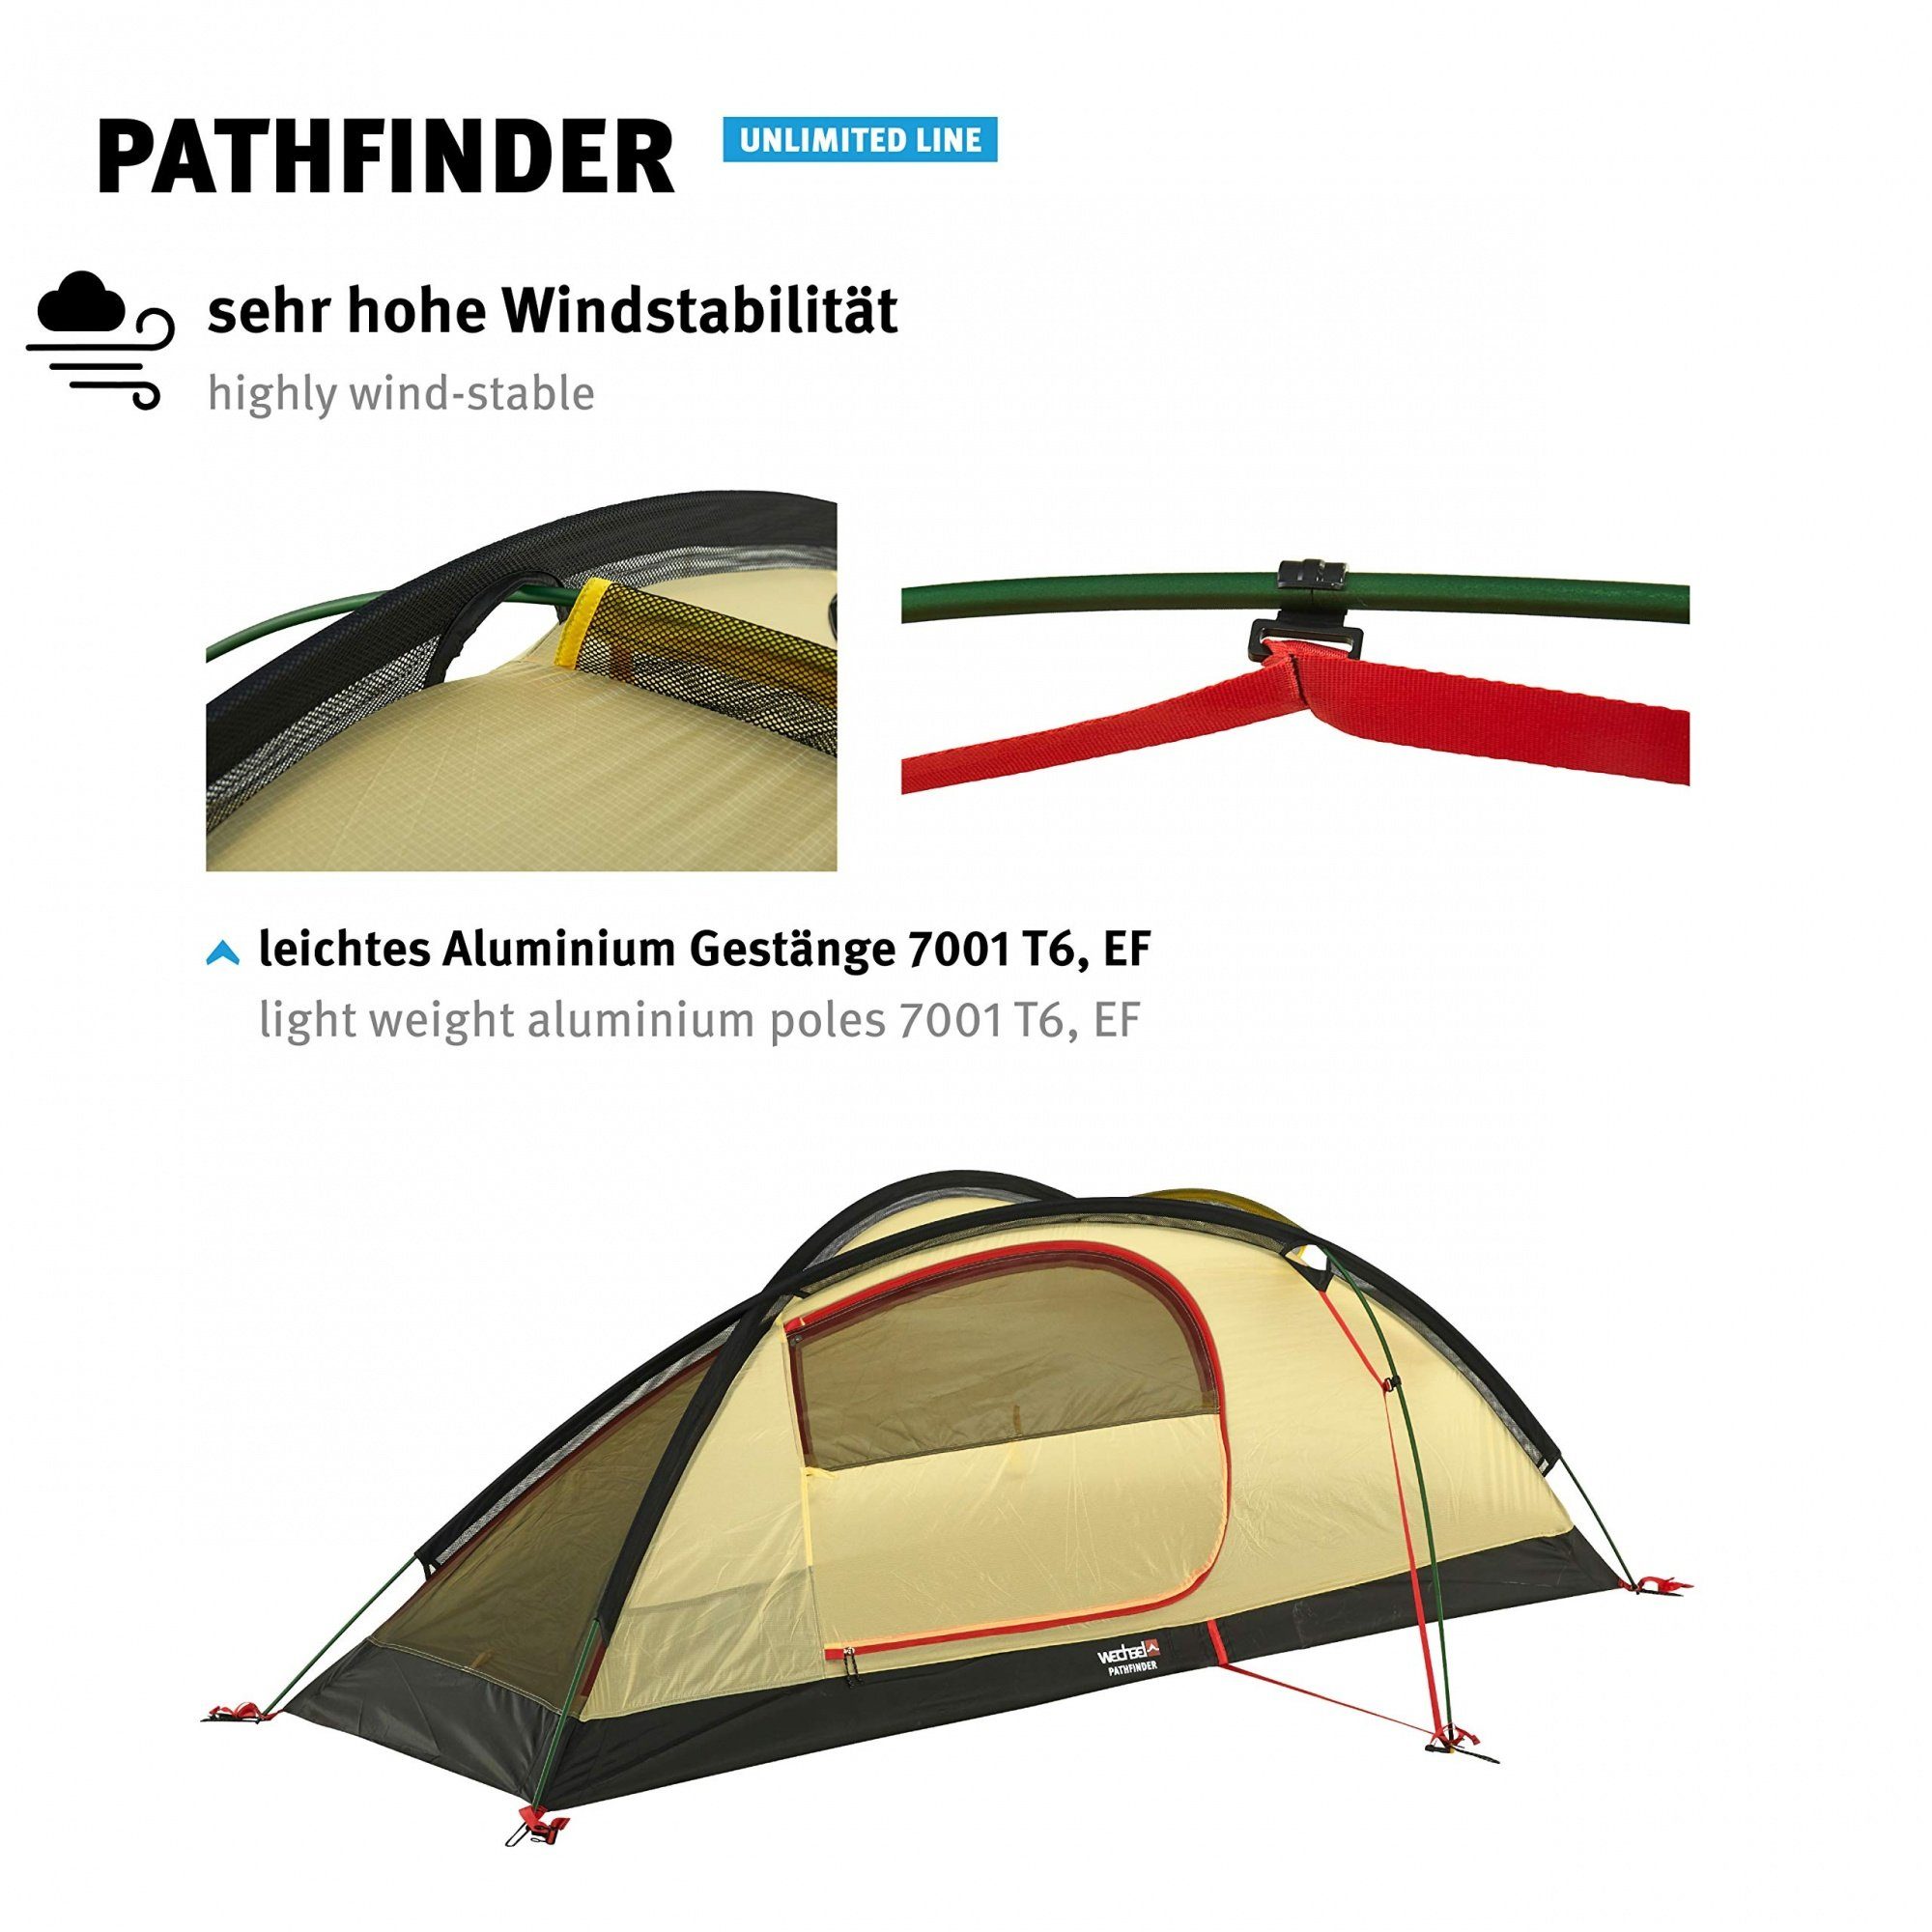 Line Zelt, 1-Personen Geodät Pathfinder - - Tents Unlimited Kuppelzelt Wechsel 1 Personen: